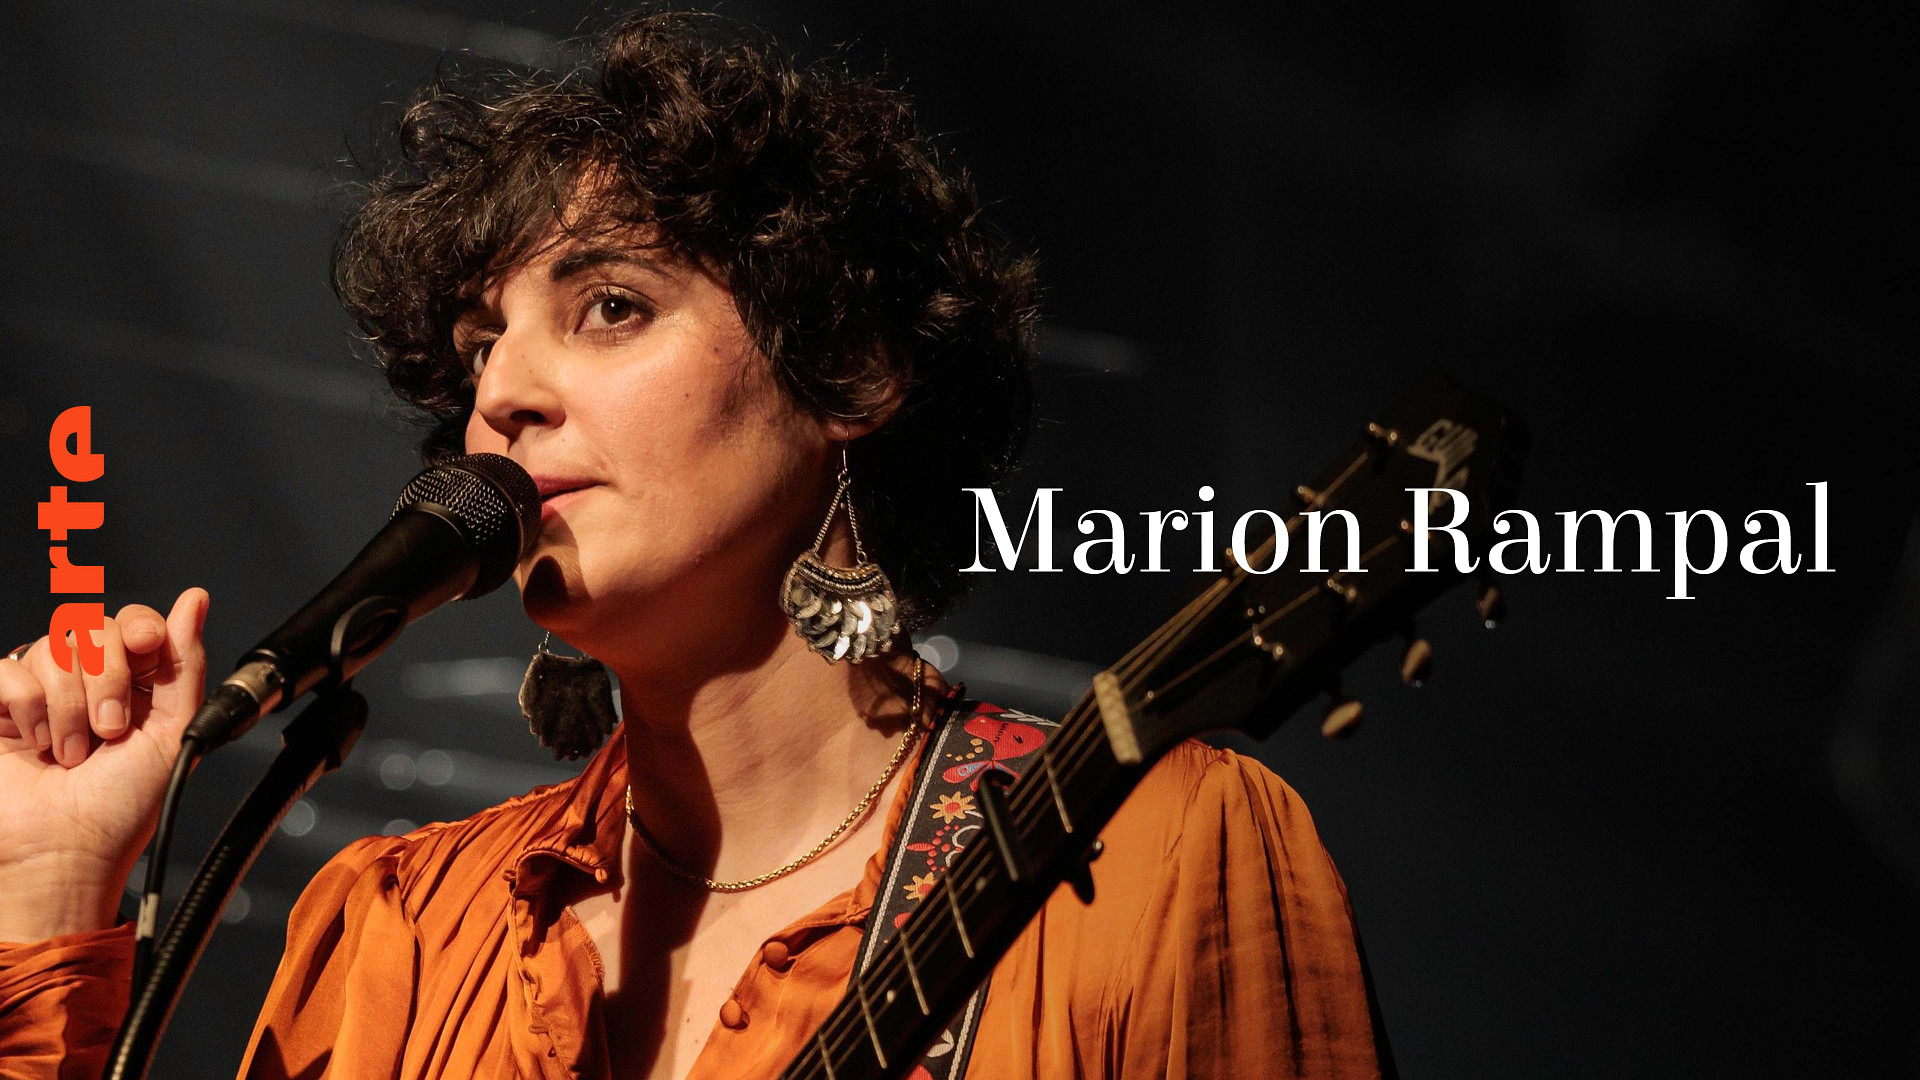 Marion Rampal